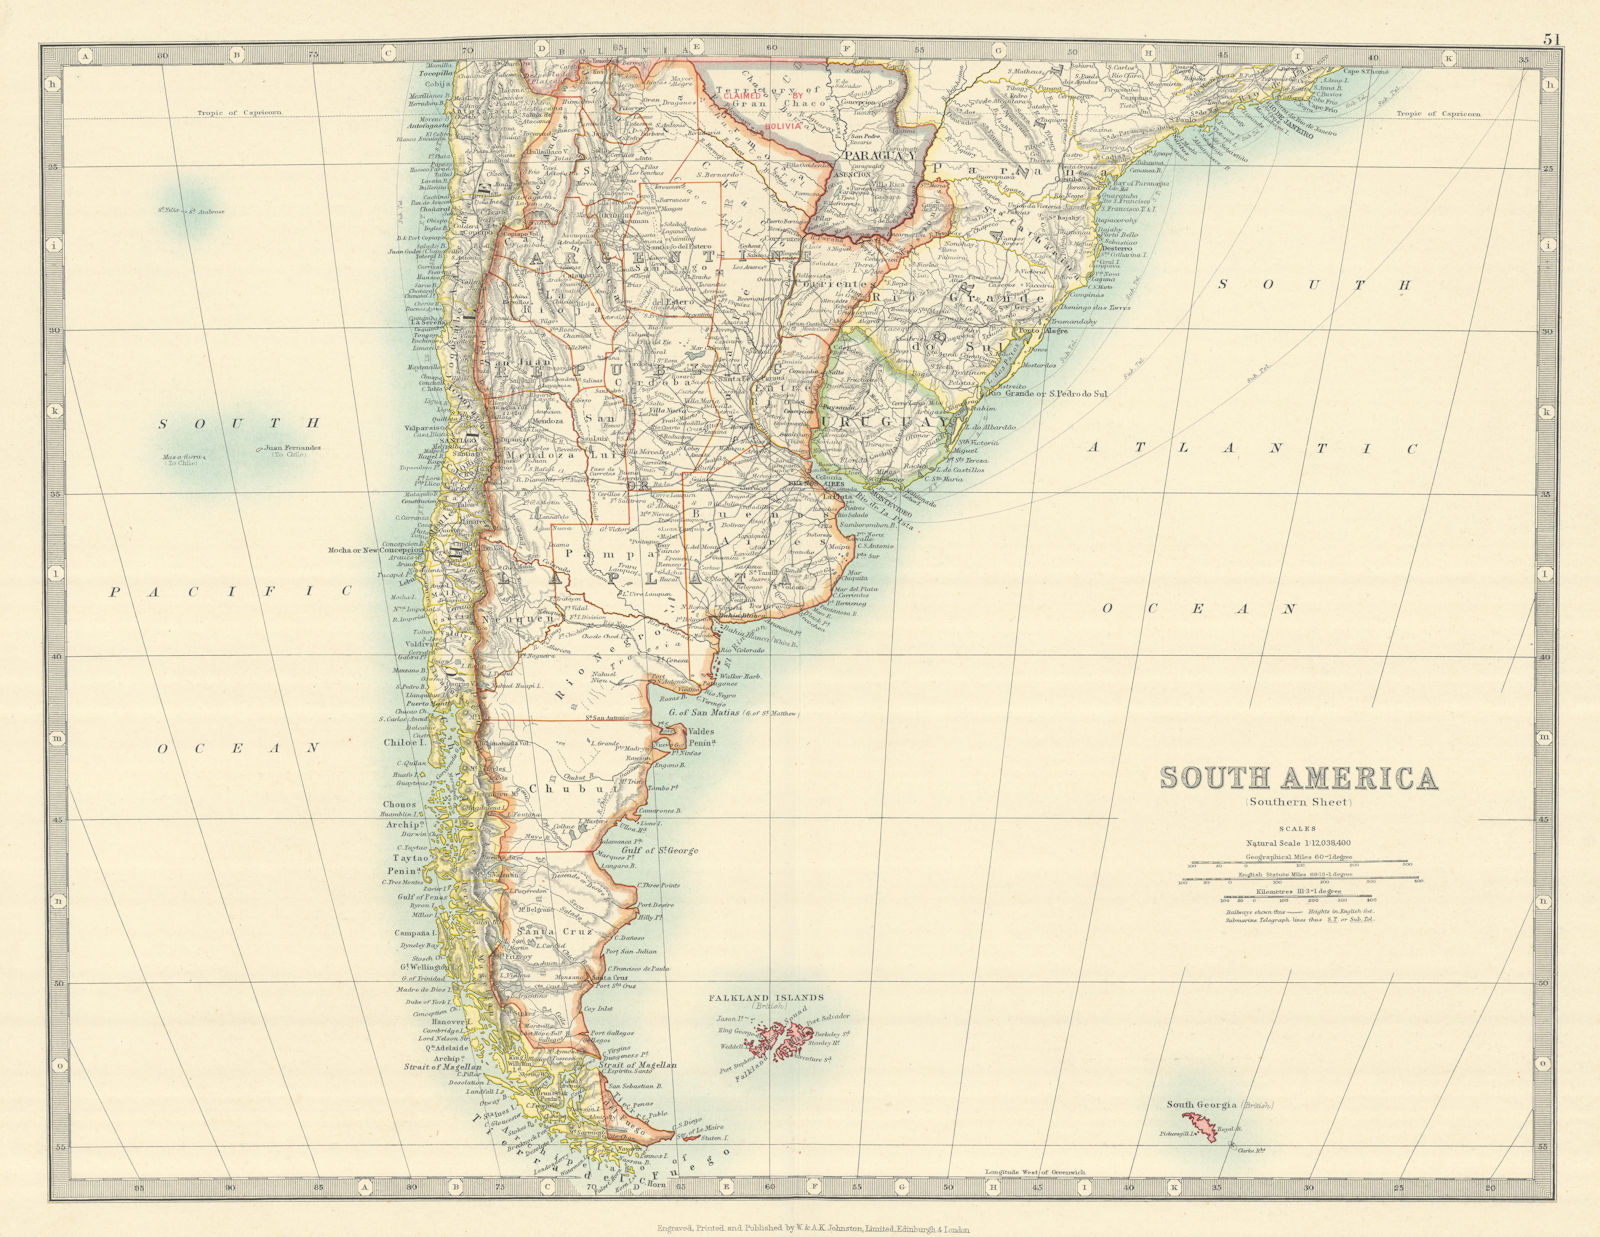 SOUTH AMERICA SOUTH SHEET. Shows Bolivia claim on Gran Chaco. JOHNSTON 1913 map